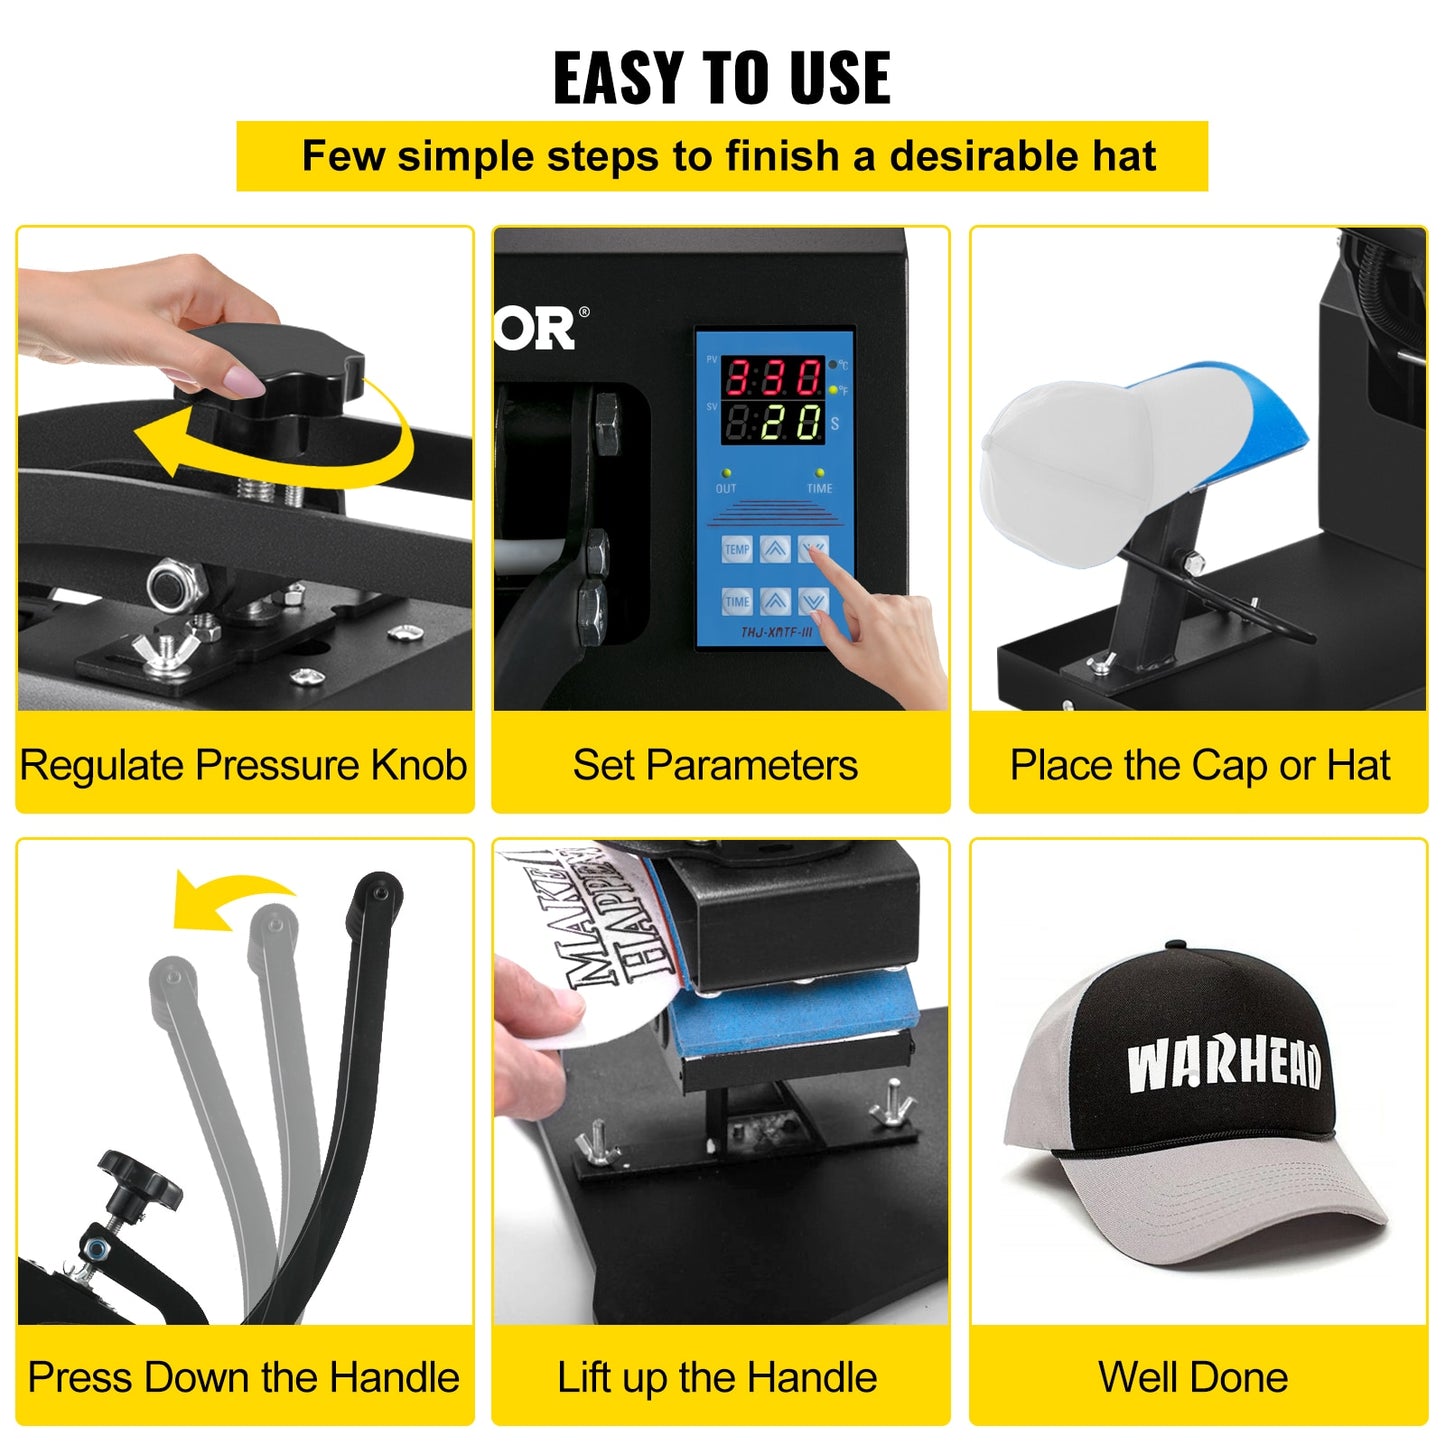 Hat Cap Transfer Stamping Heat Press 5.5 x 3.5 inch Sublimation Machine, Digital Display, DIY Advertise